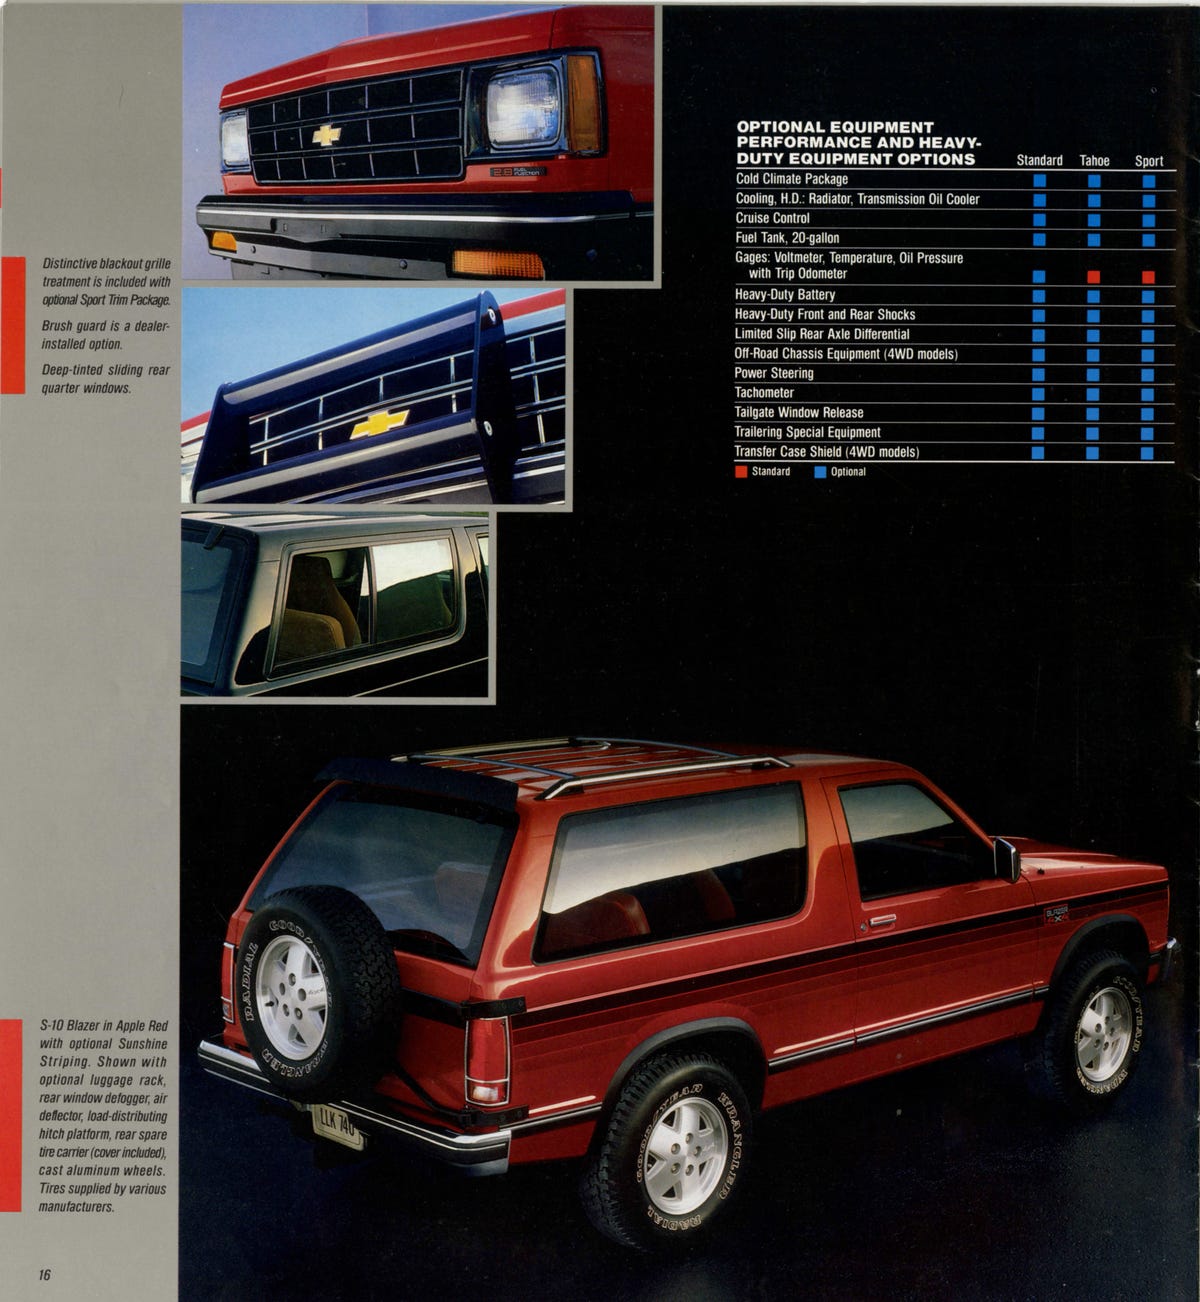 1987-chevrolet-s-10-blazer-sales-brochure-16